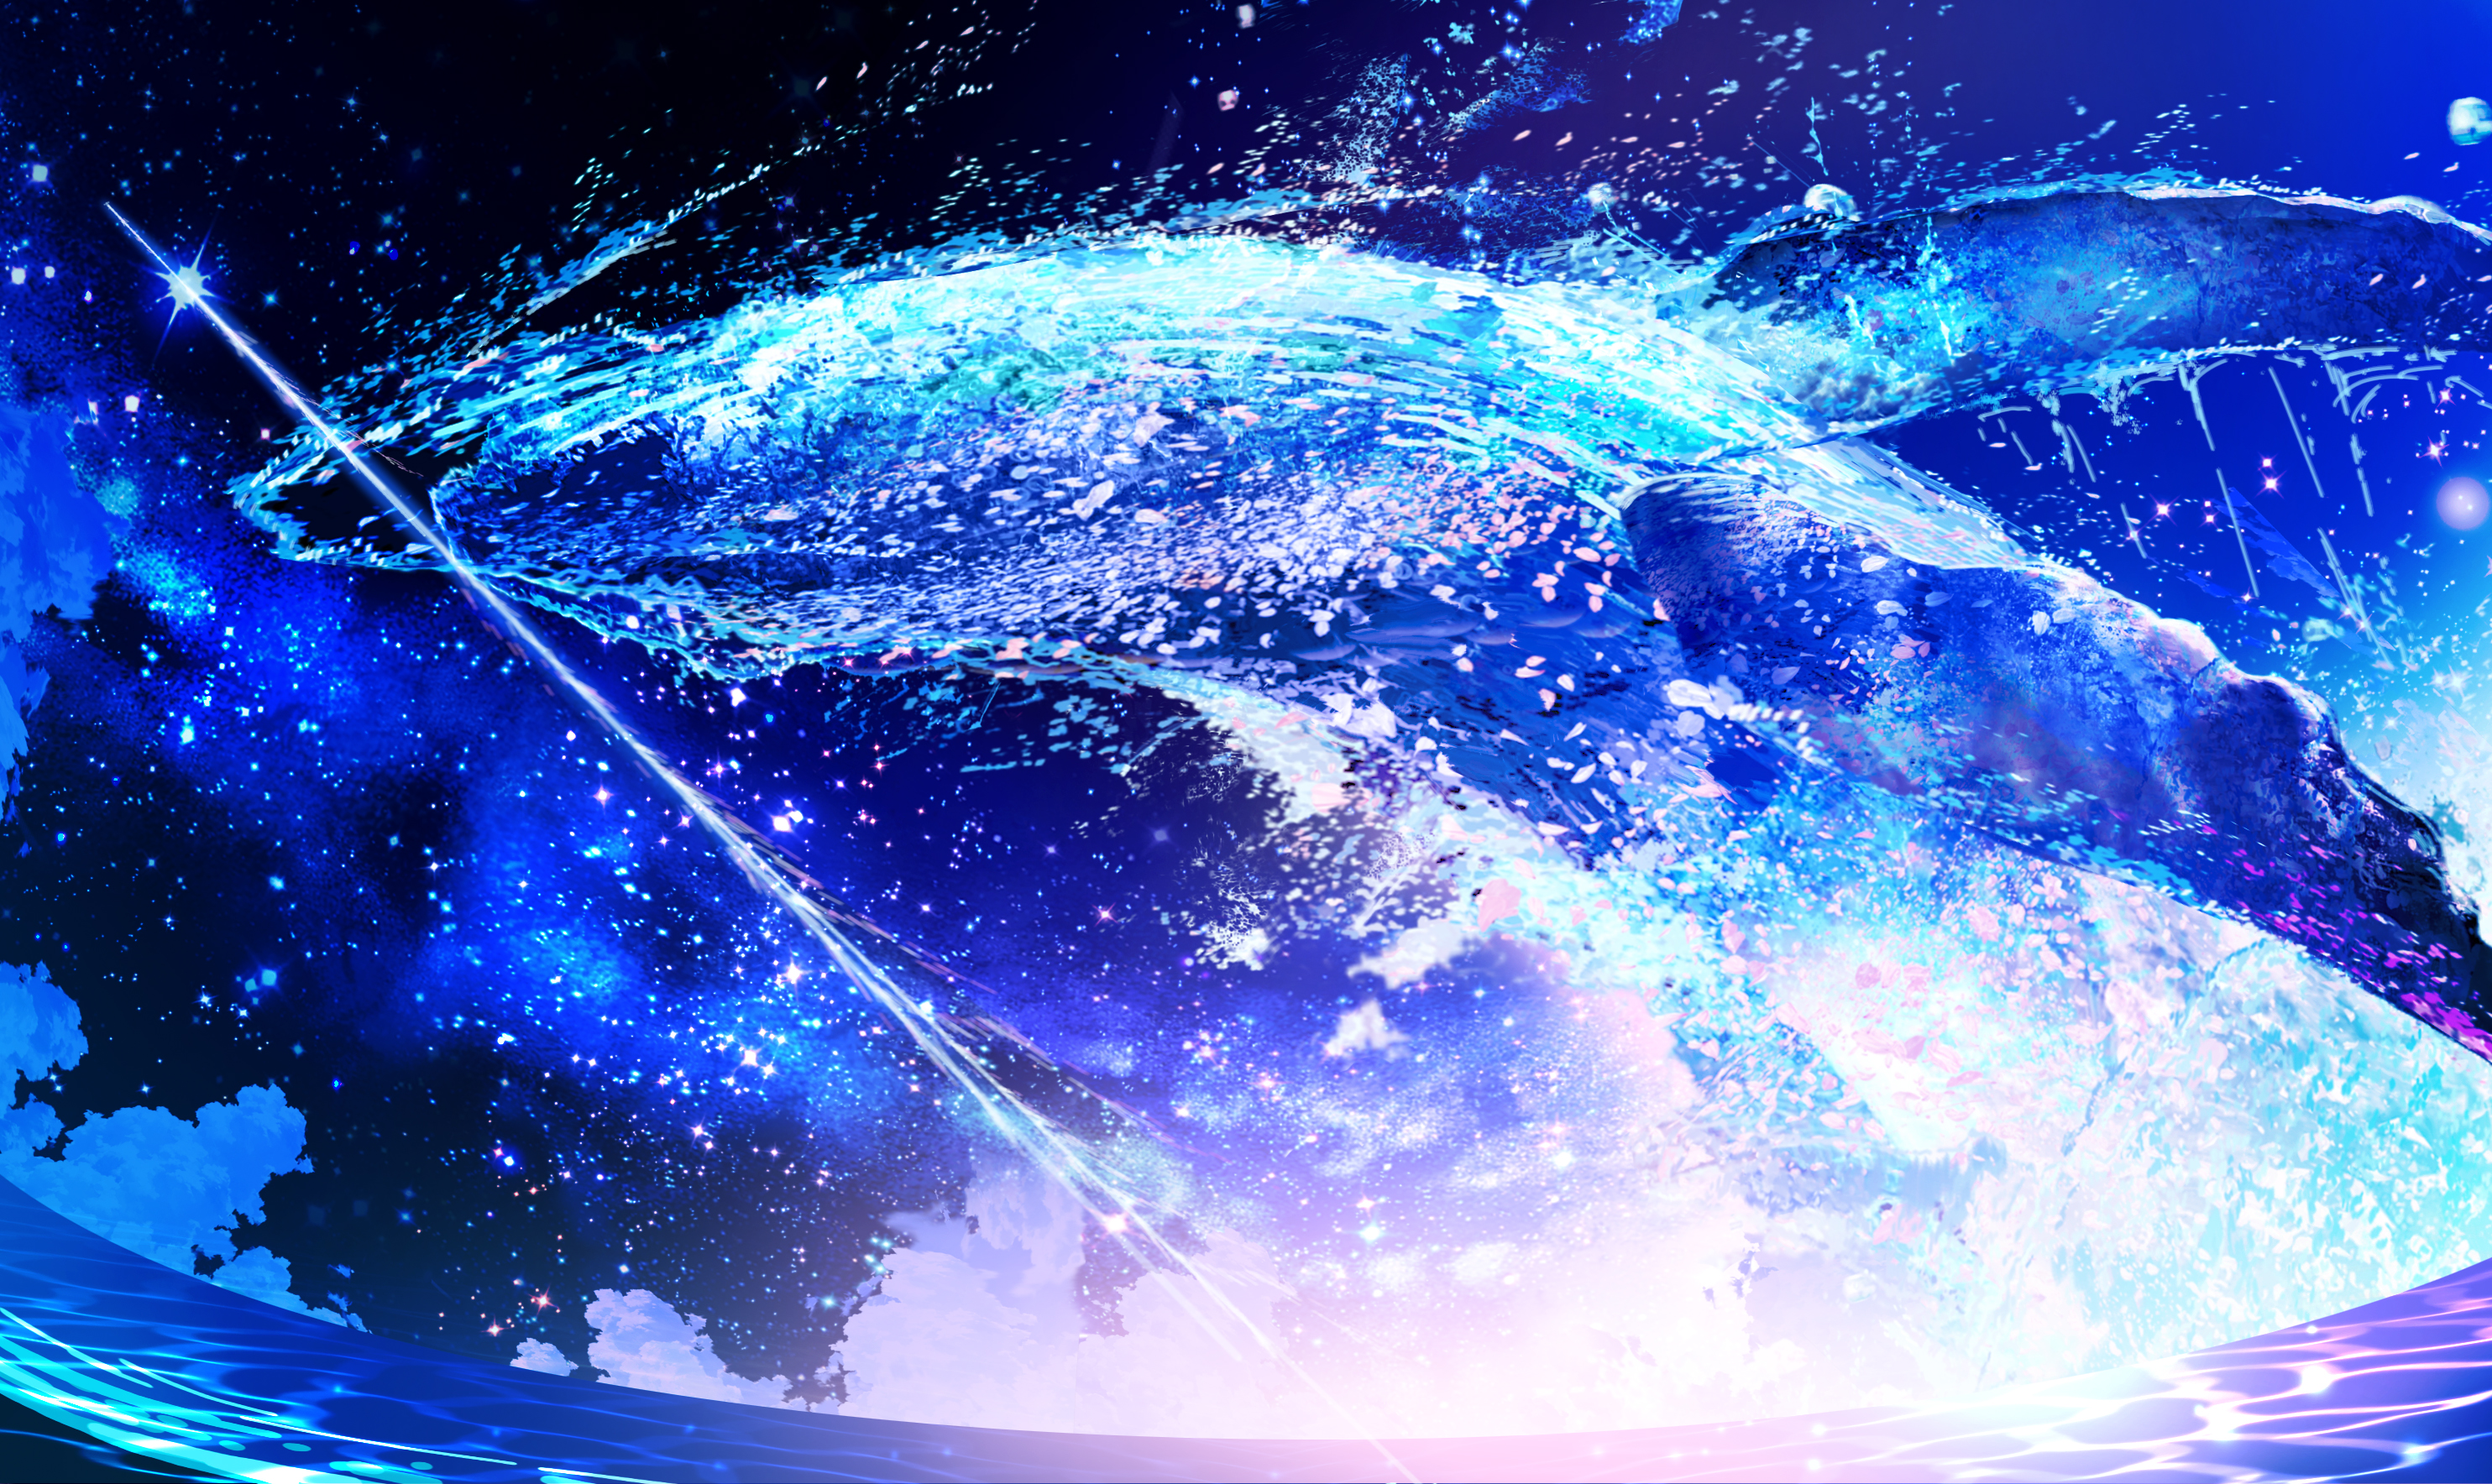 Anime 2968x1768 anime artwork animals whale stars clouds wide screen water makoron117 sky flying whales horizon